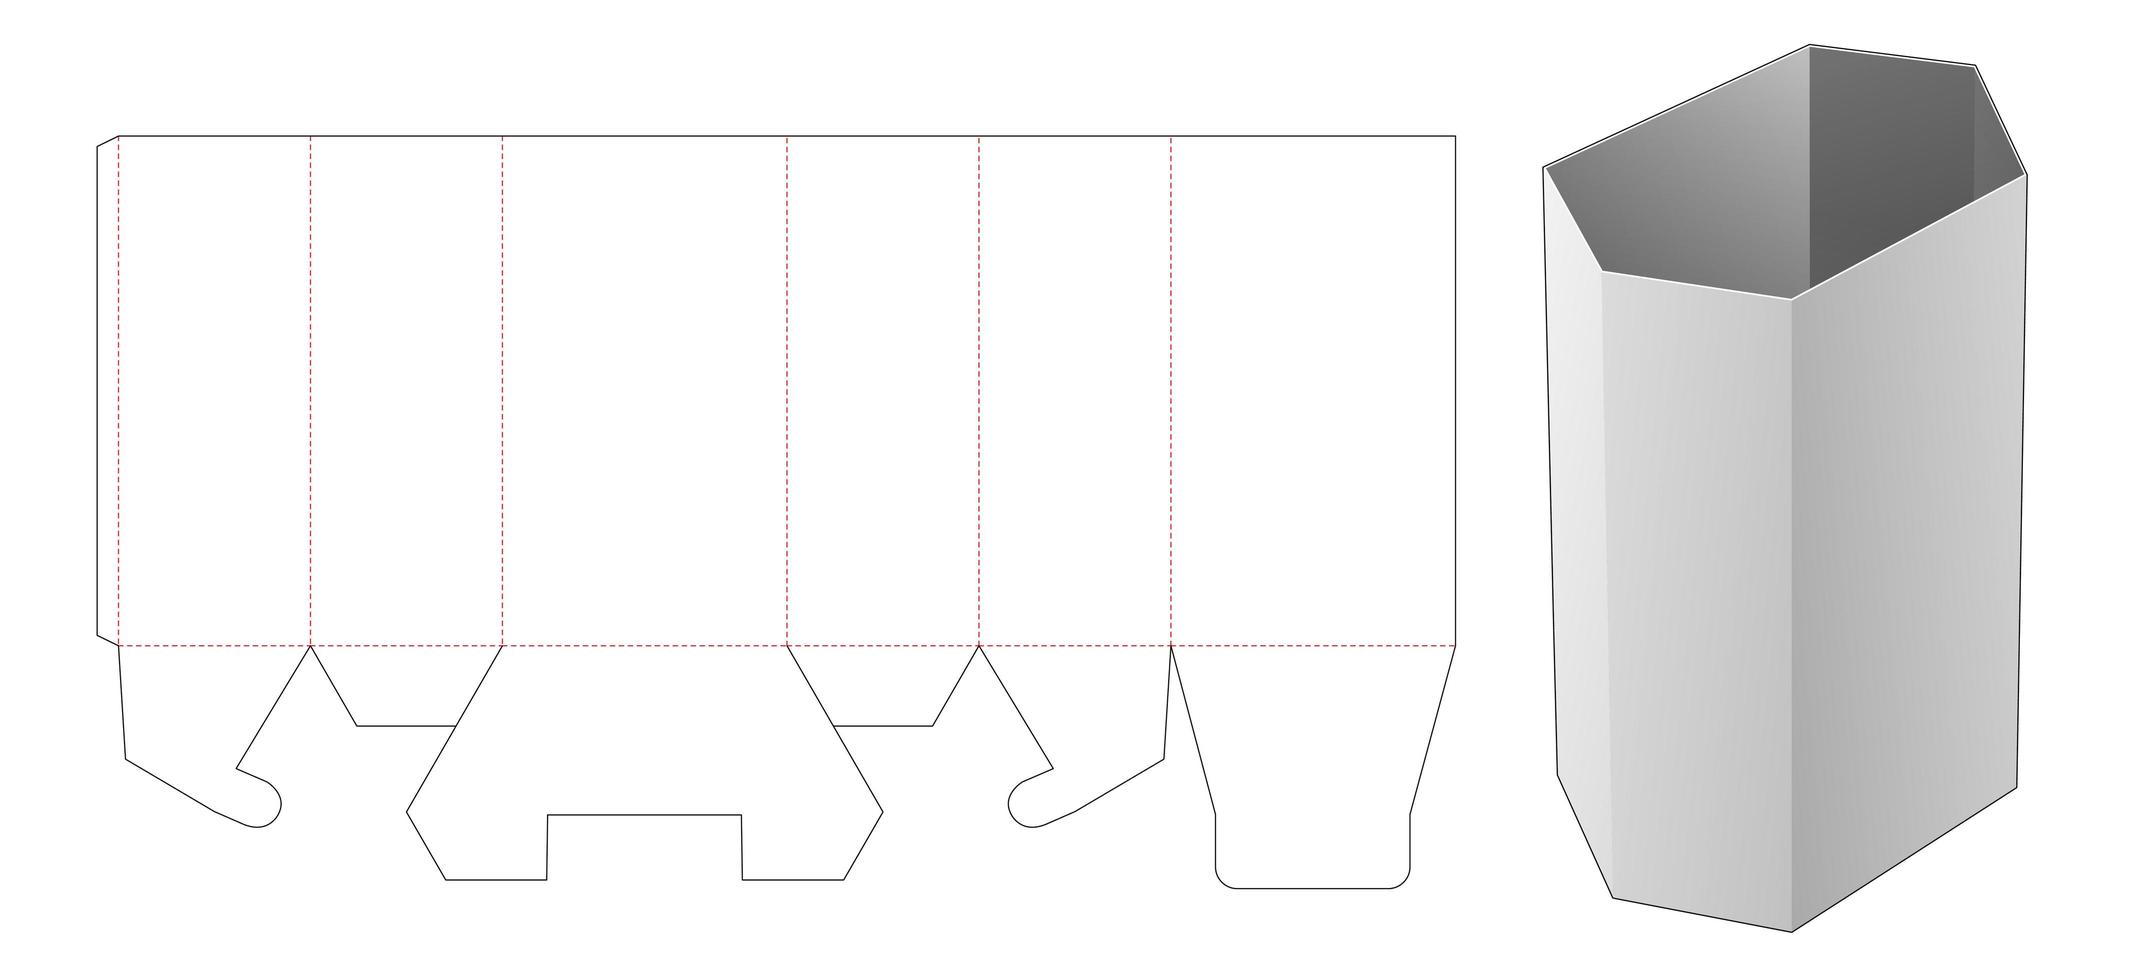 Hexagonal stationery tall box die cut template vector